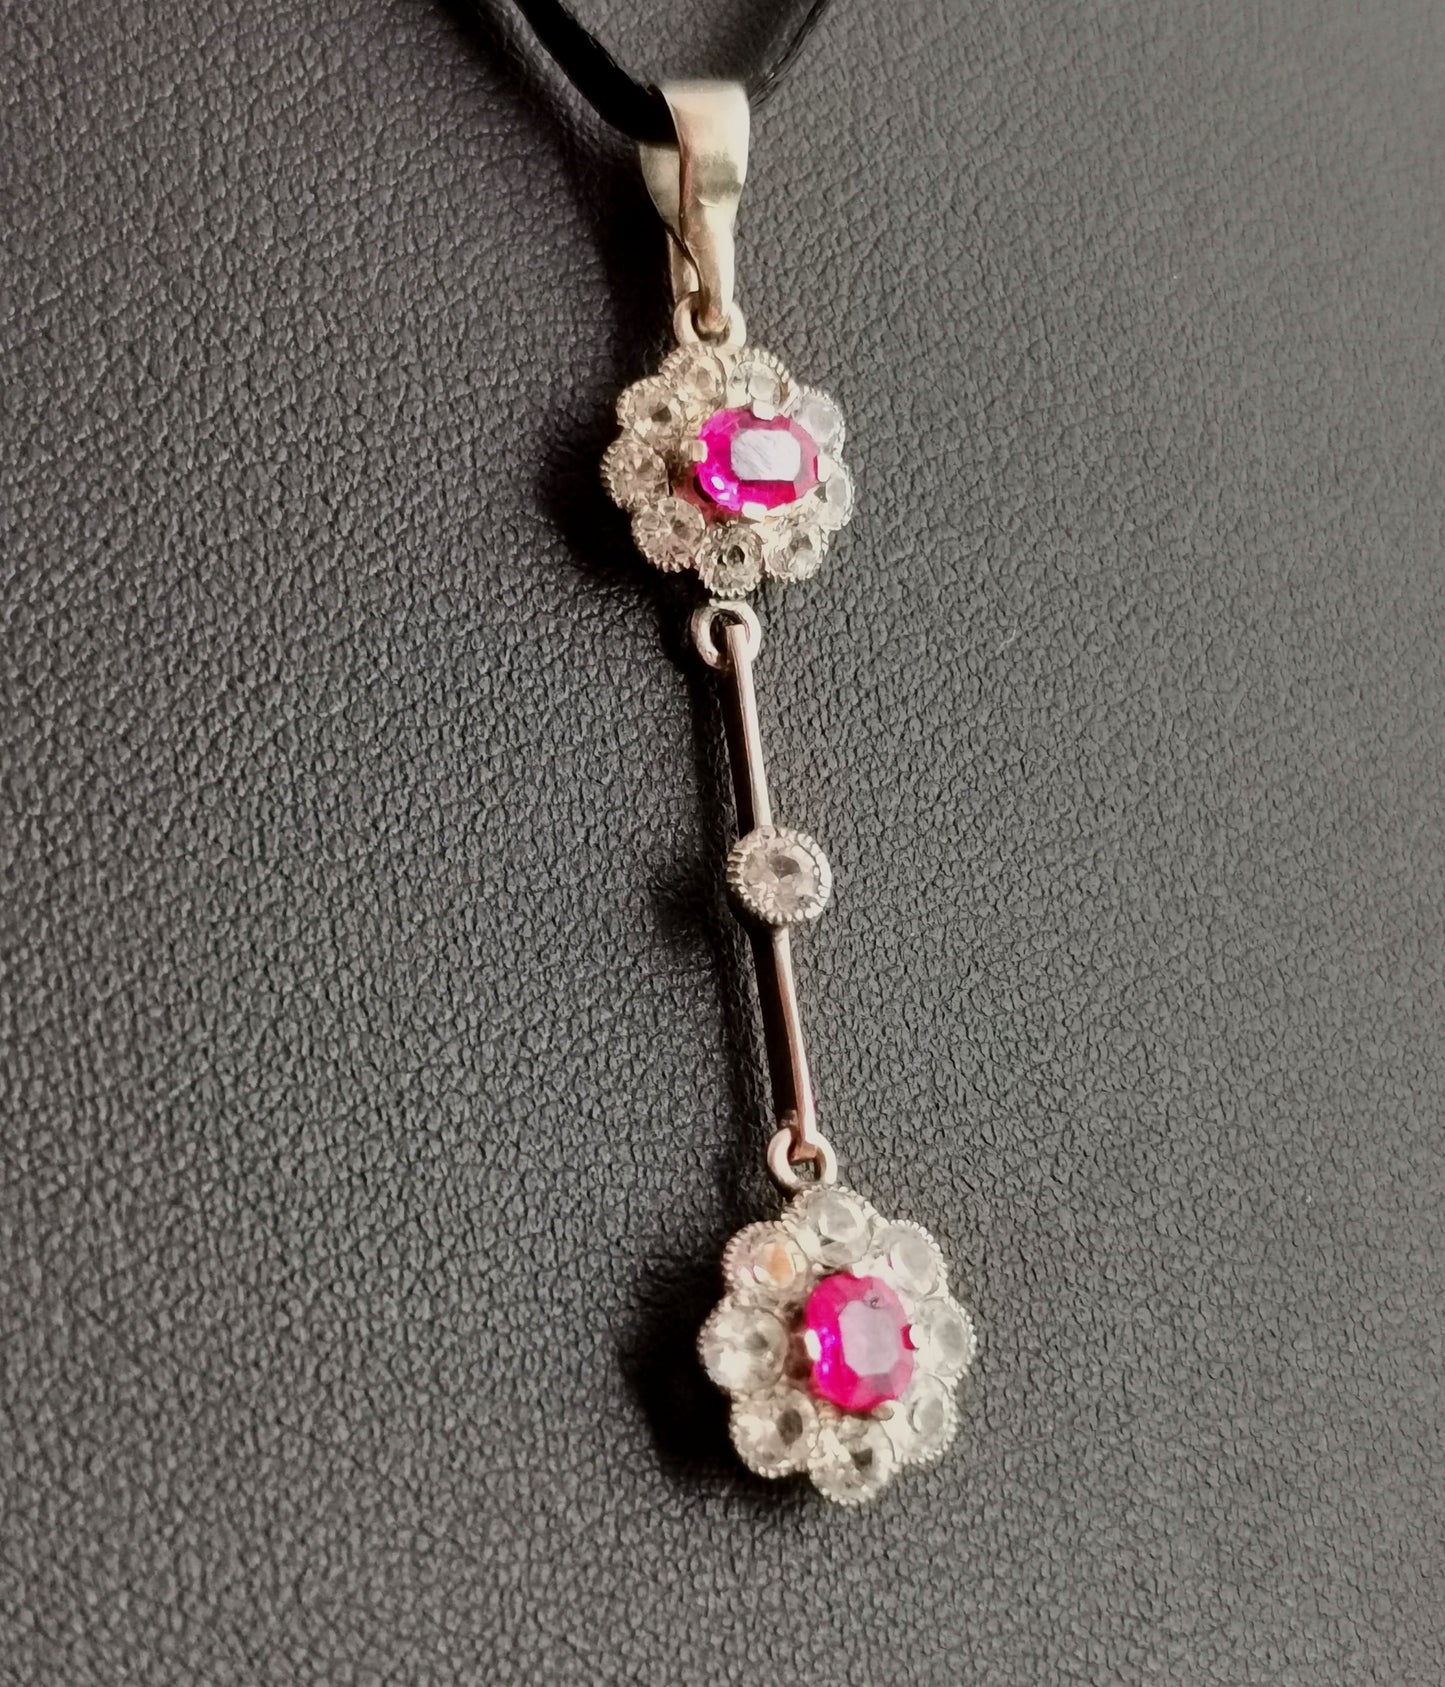 Antique Ruby and Zircon drop pendant, floral